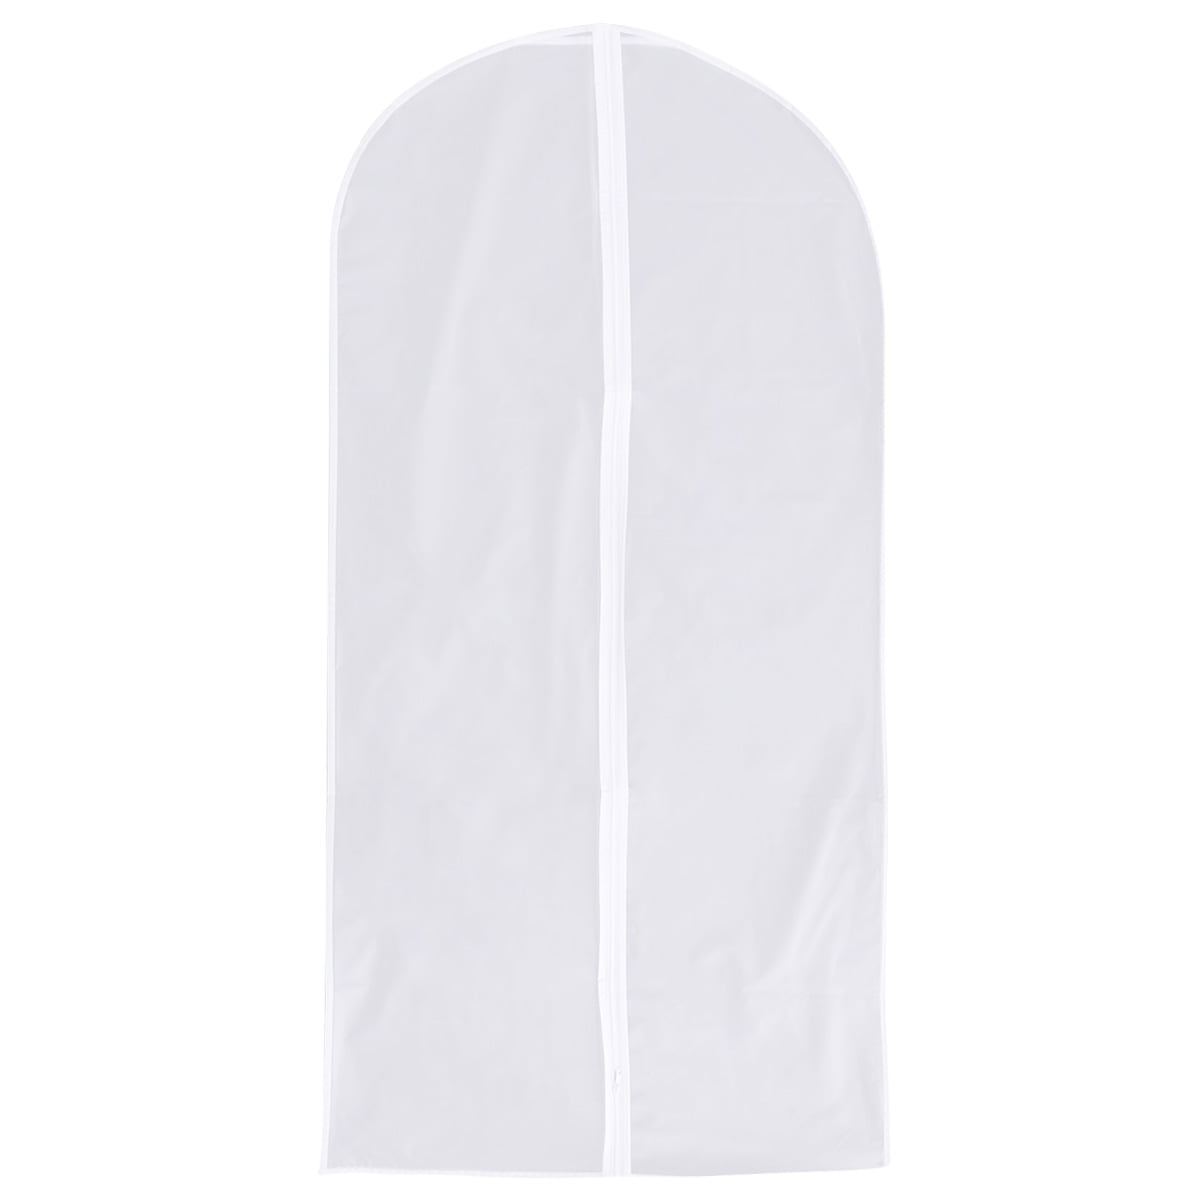 Dry Cleaner Garment Bags | Plastic Garment Bags Wholesale USA